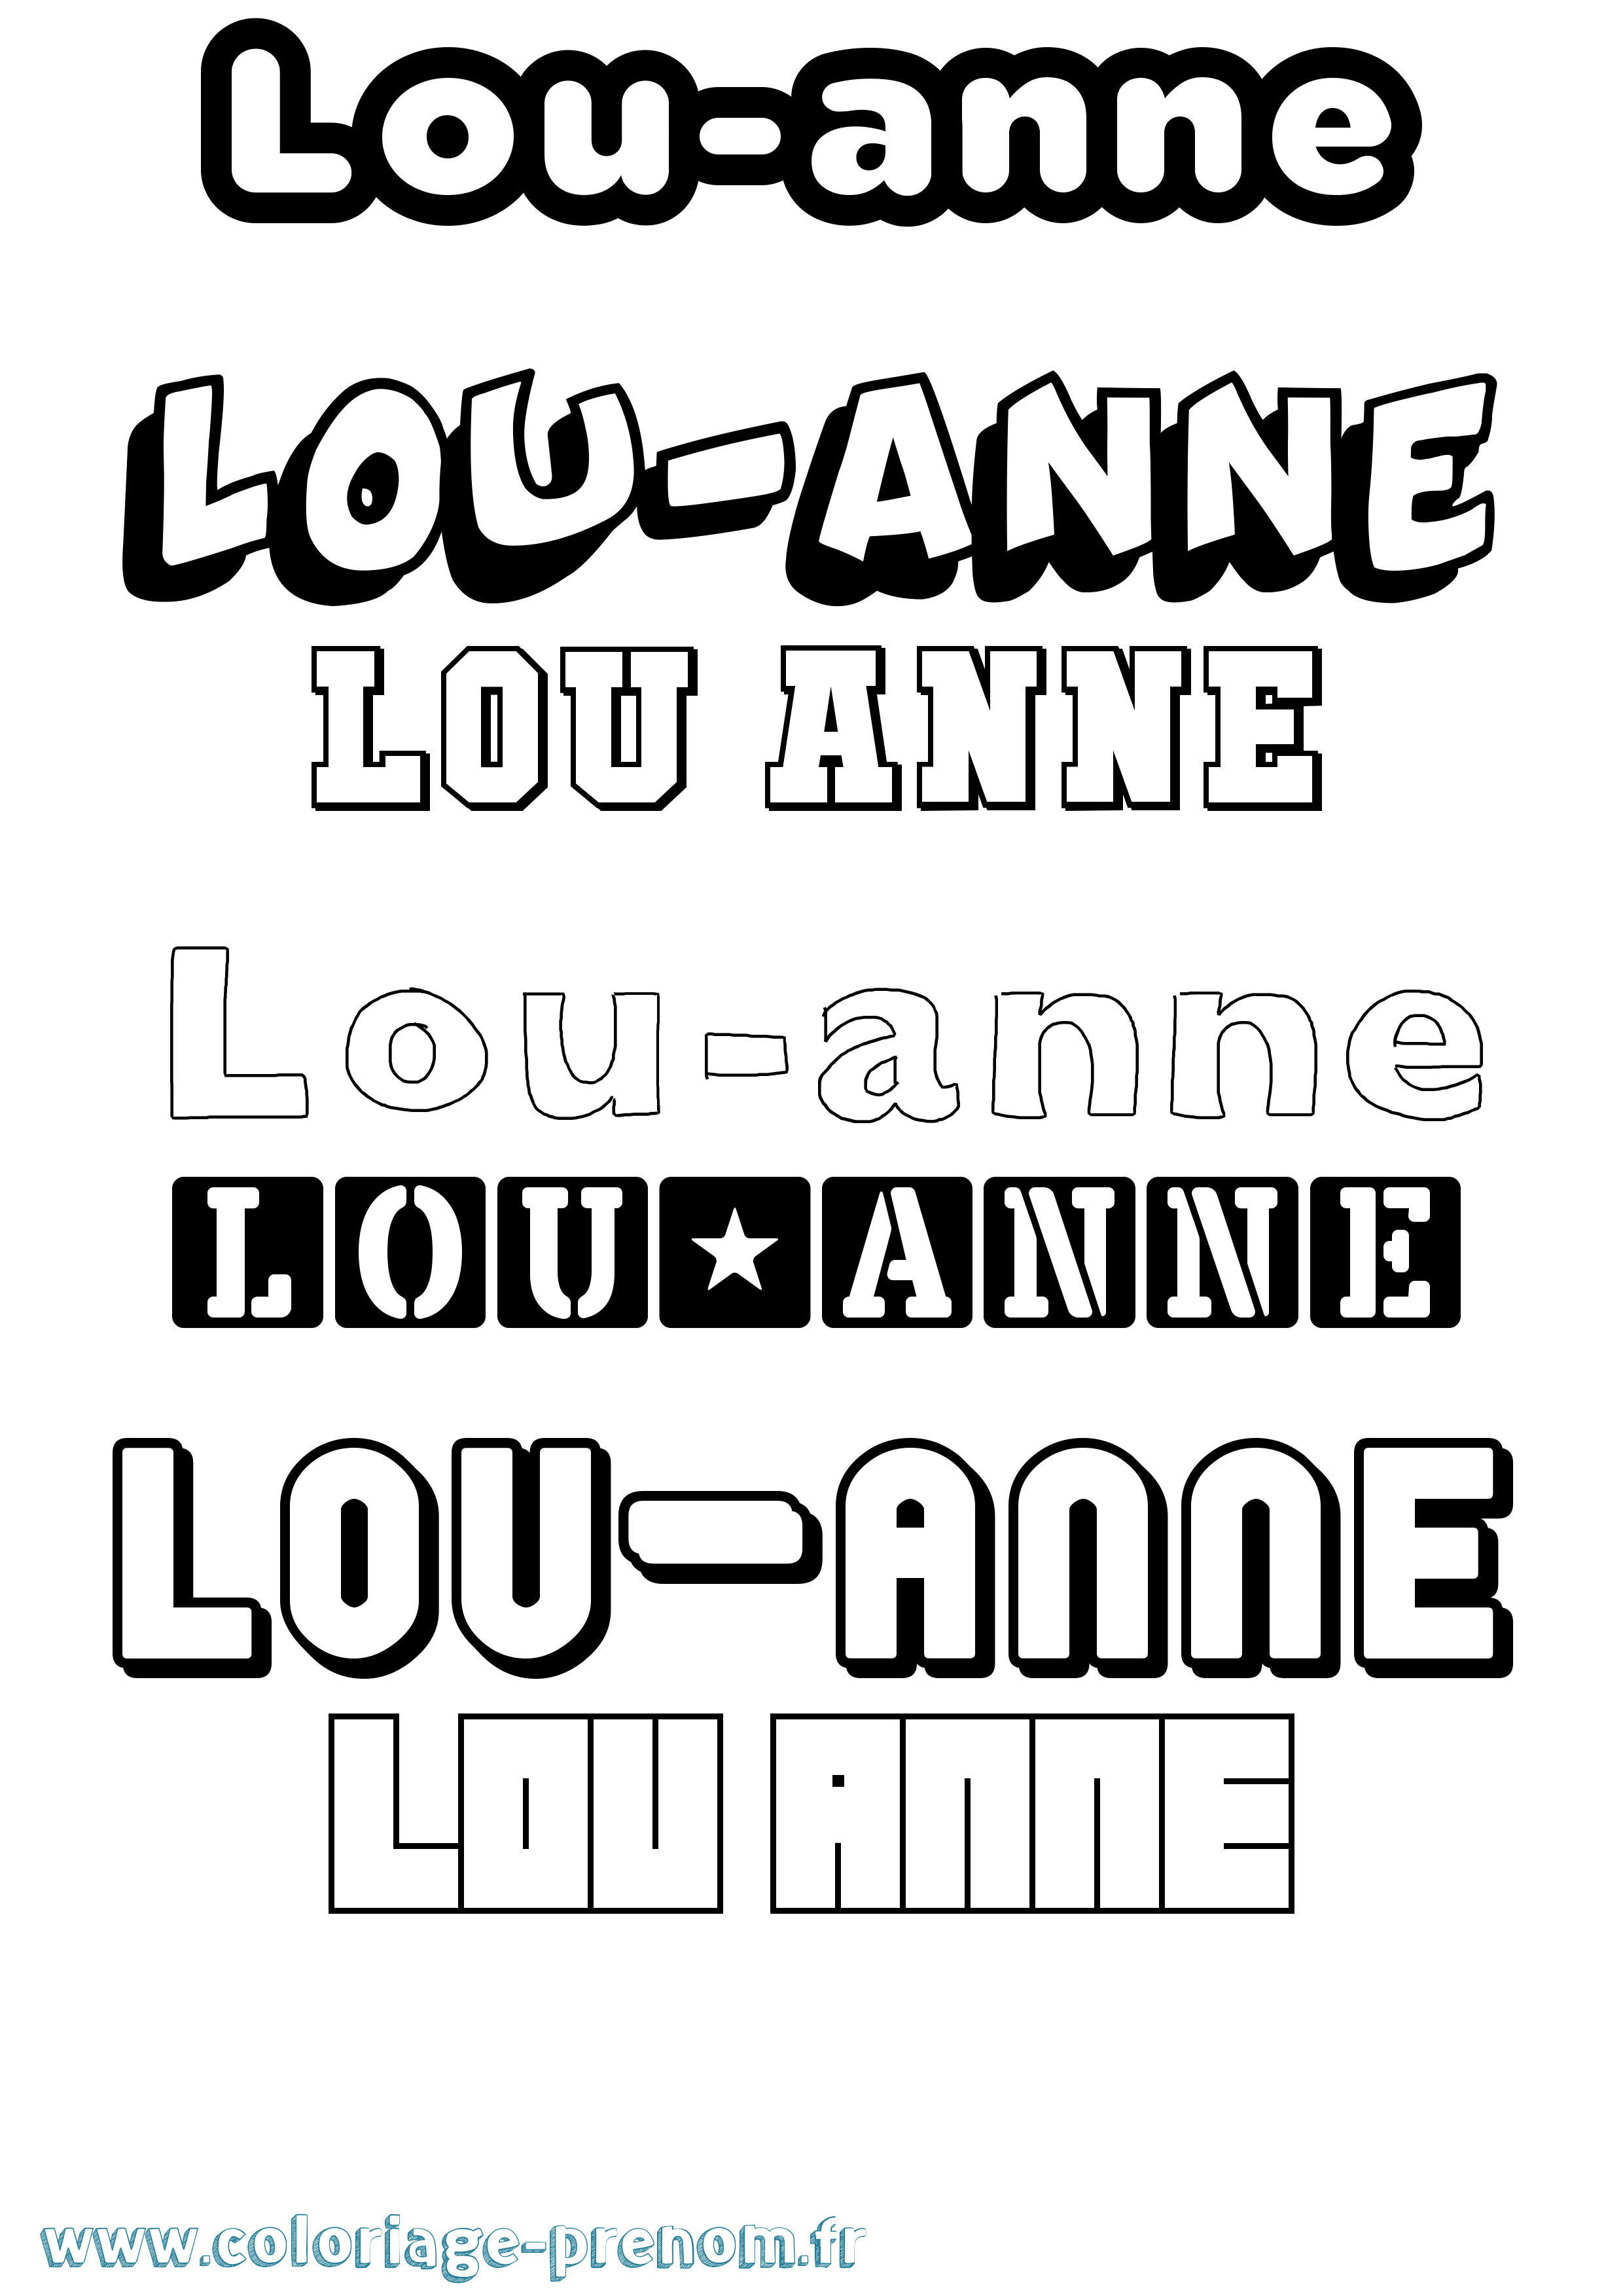 Coloriage prénom Lou-Anne